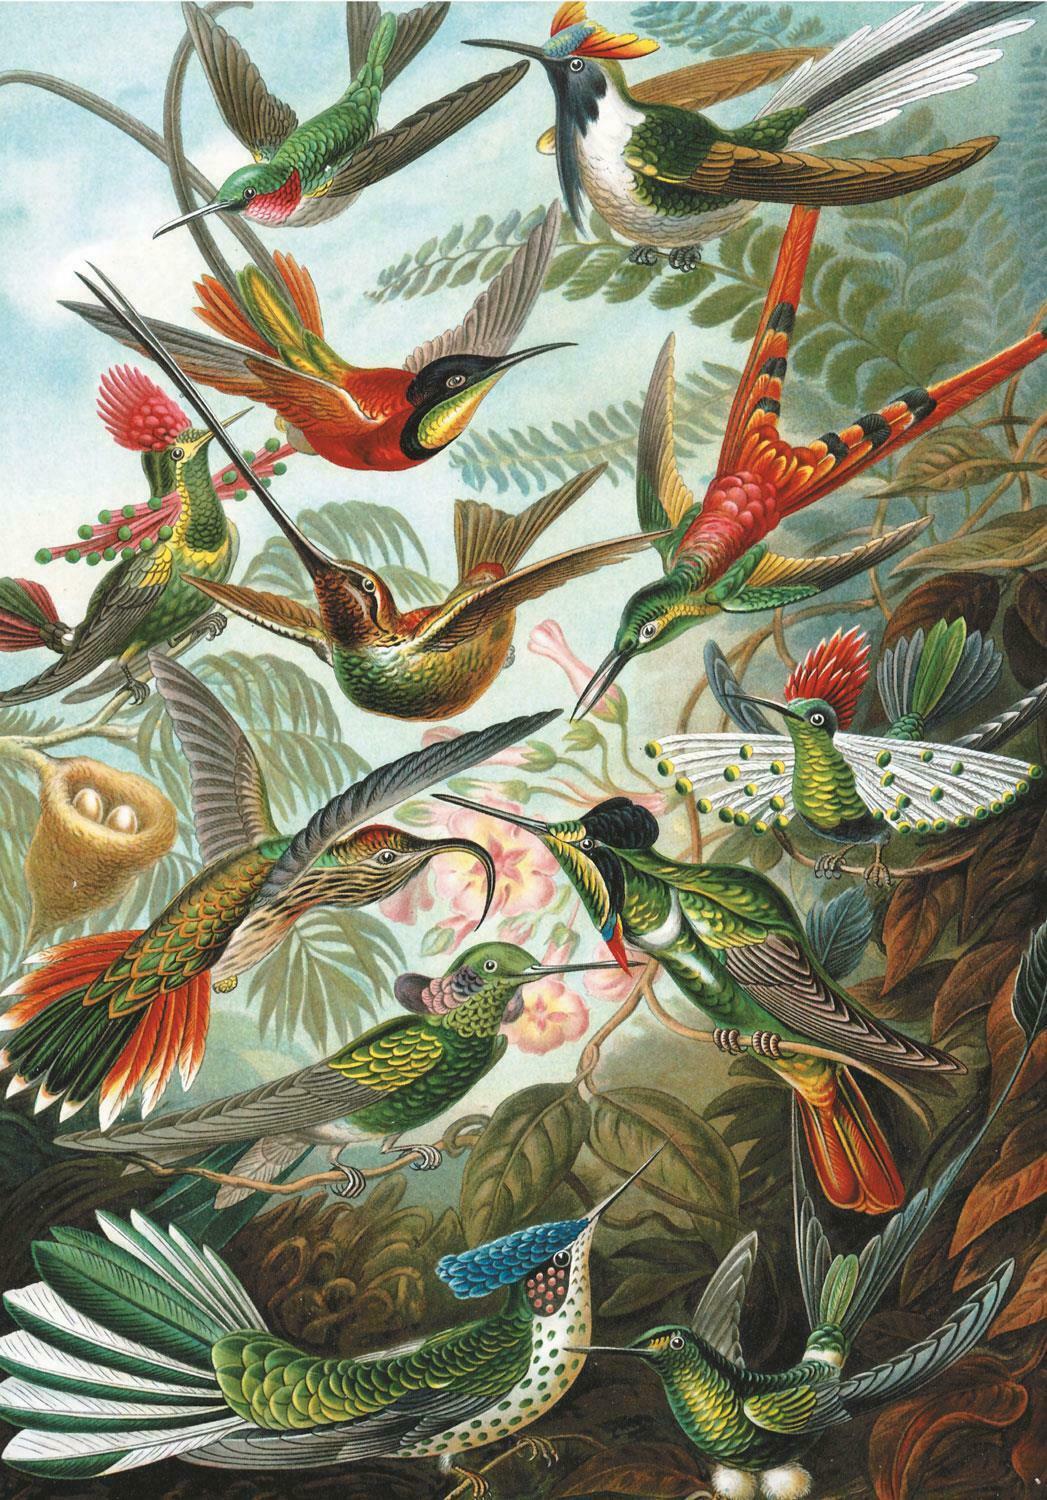 Piatnik - Haeckel Hummingbirds 1000 Piece Jigsaw